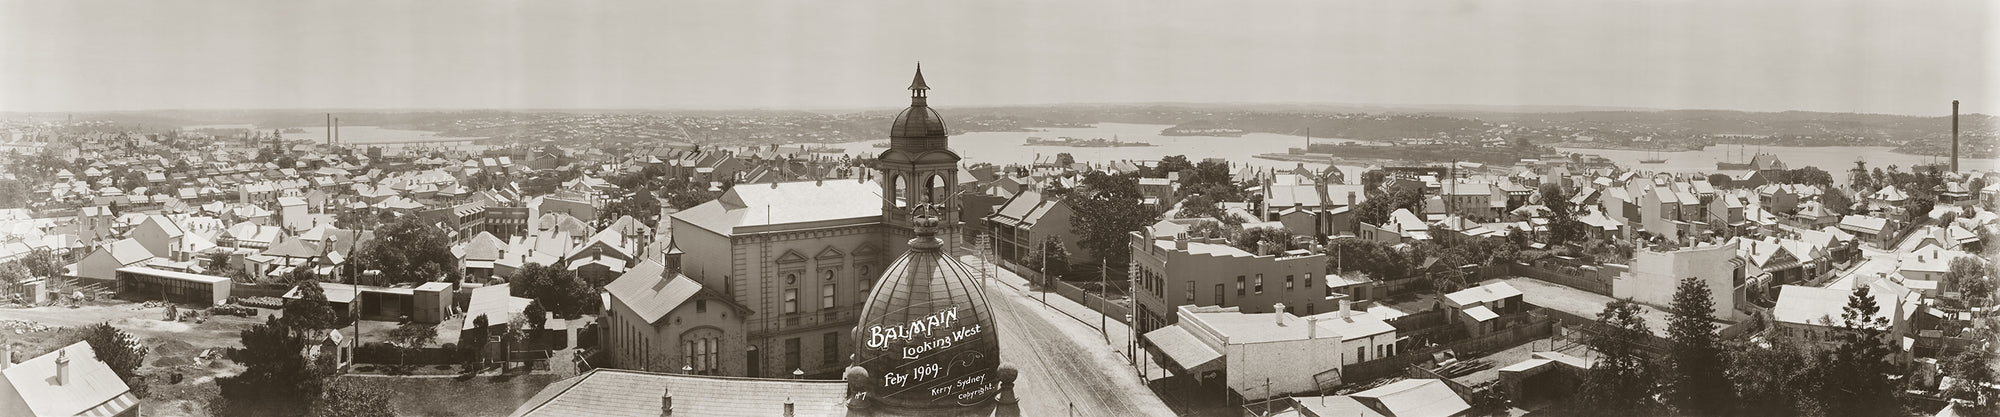 Looking West, Balmain NSW Australia 1919 